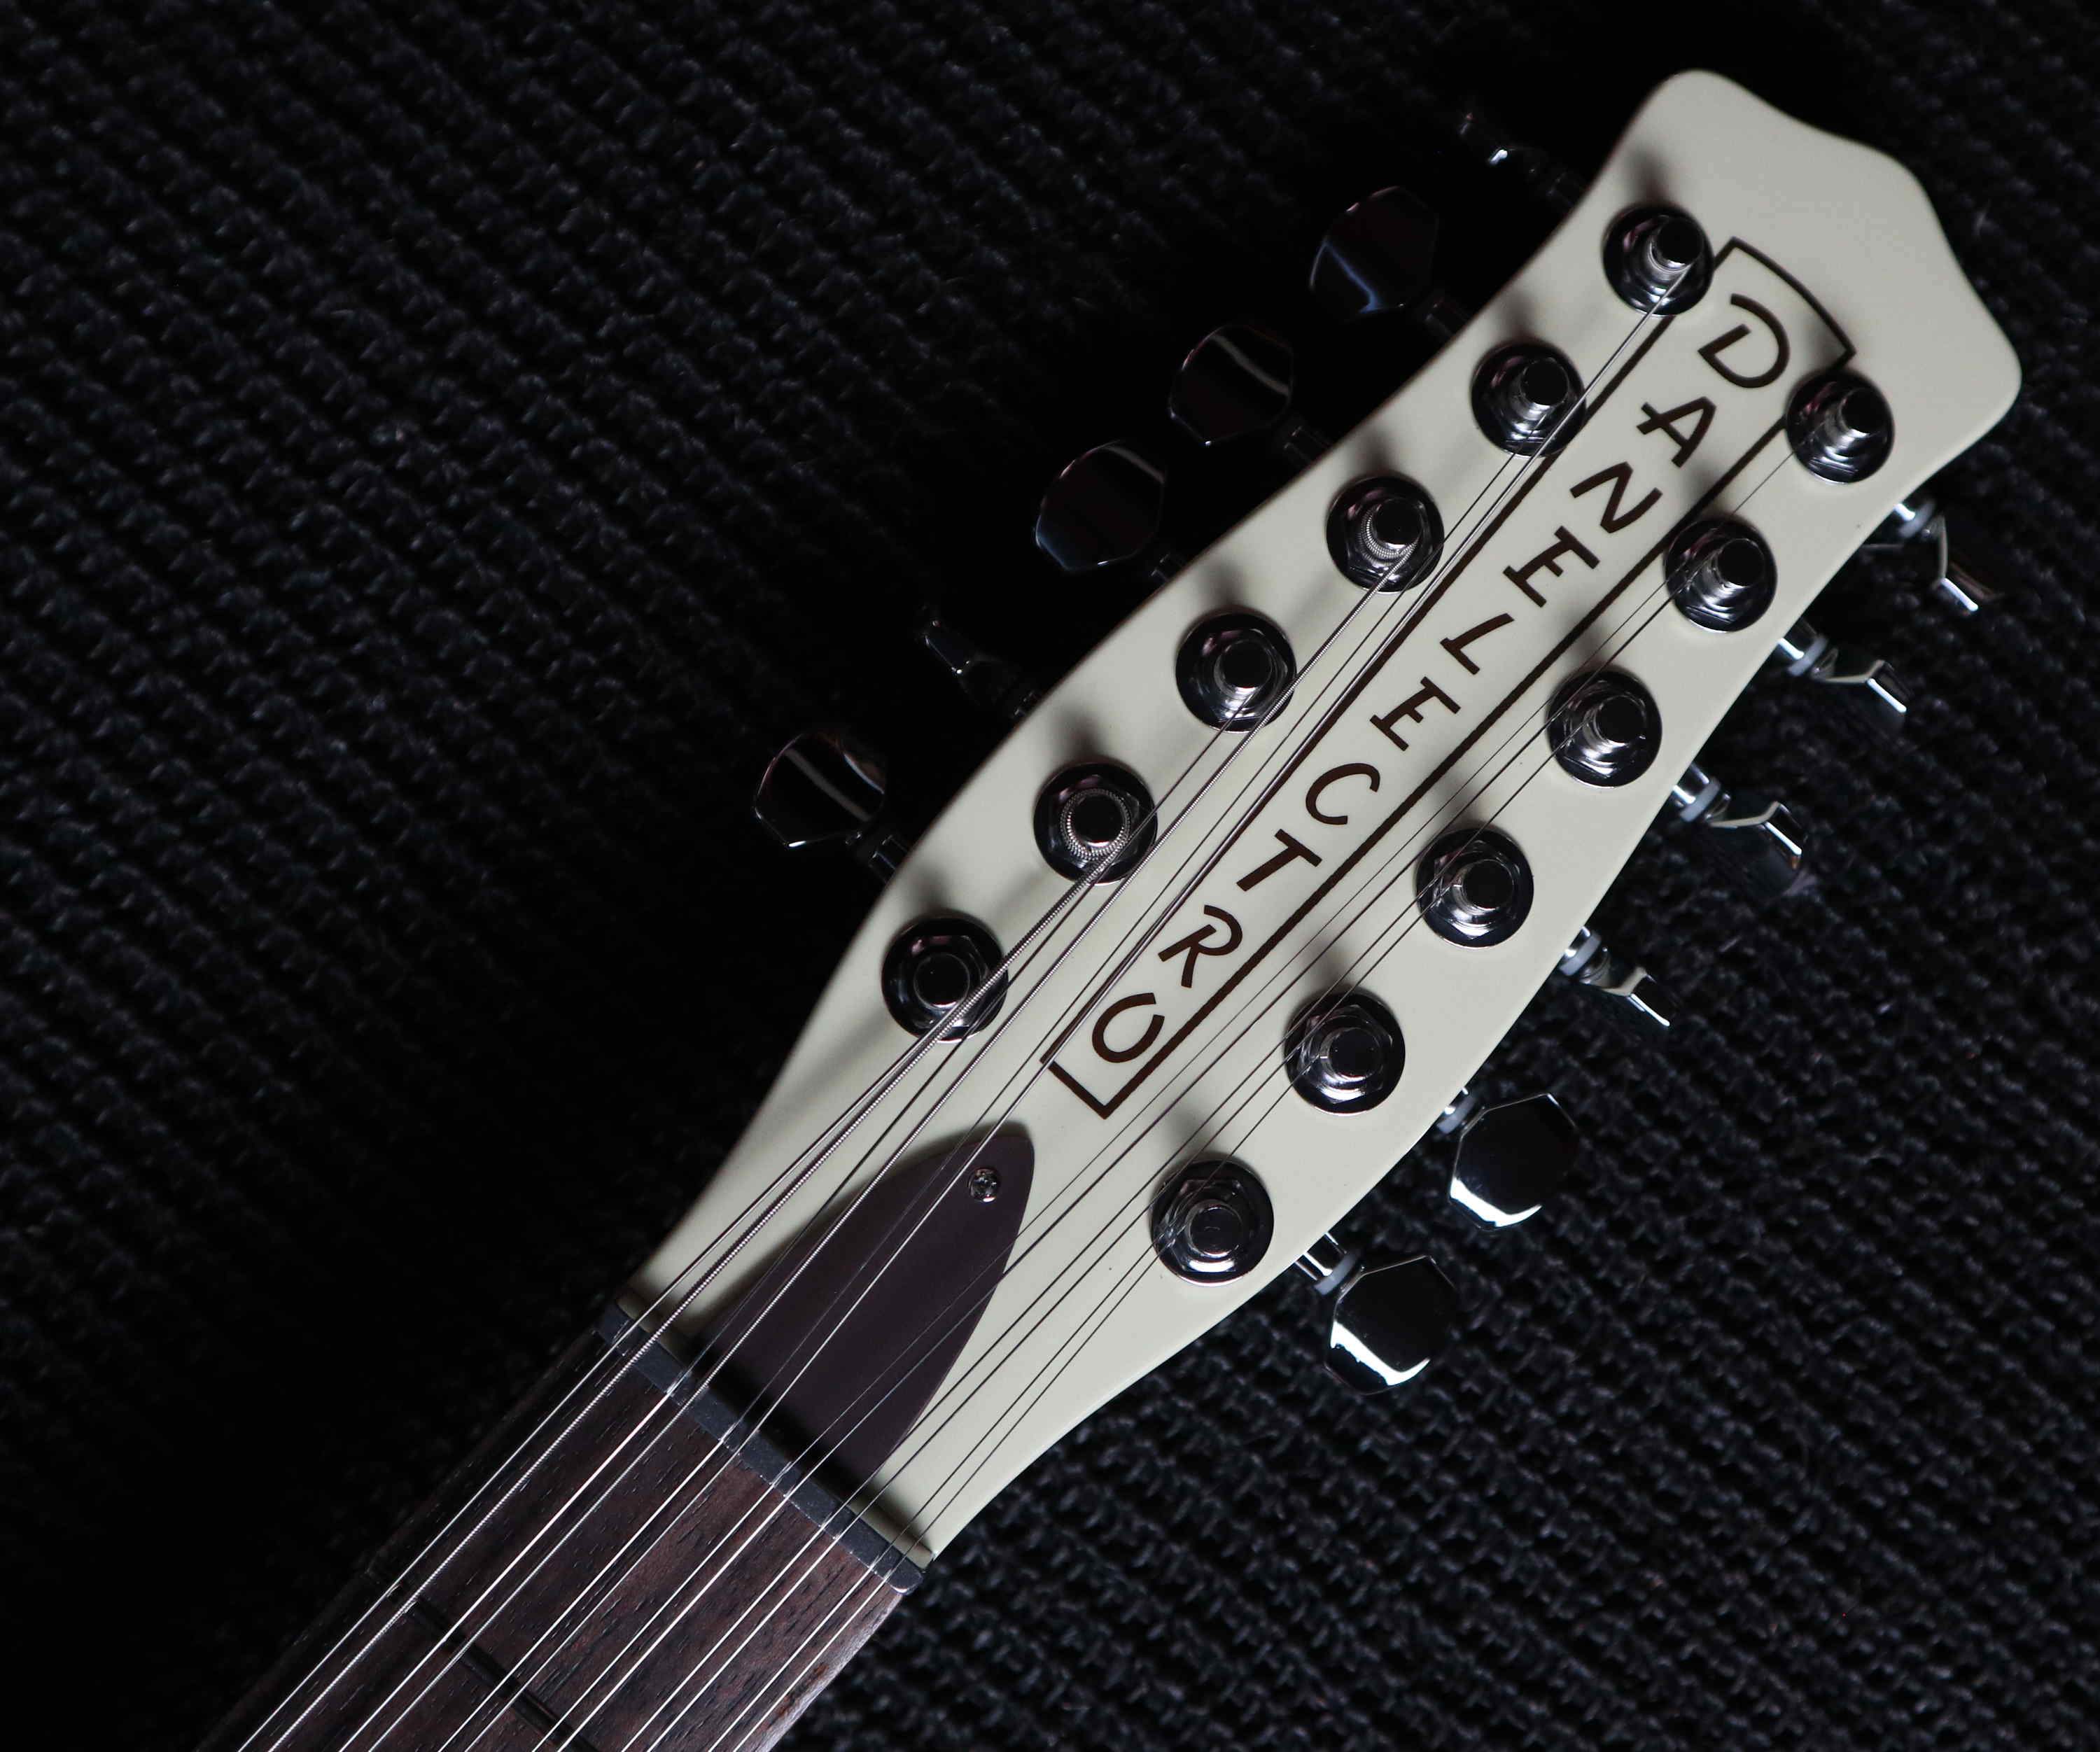 Danelectro Vintage 12 Sting Guitar ~ Vintage White, Electric Guitar for sale at Richards Guitars.